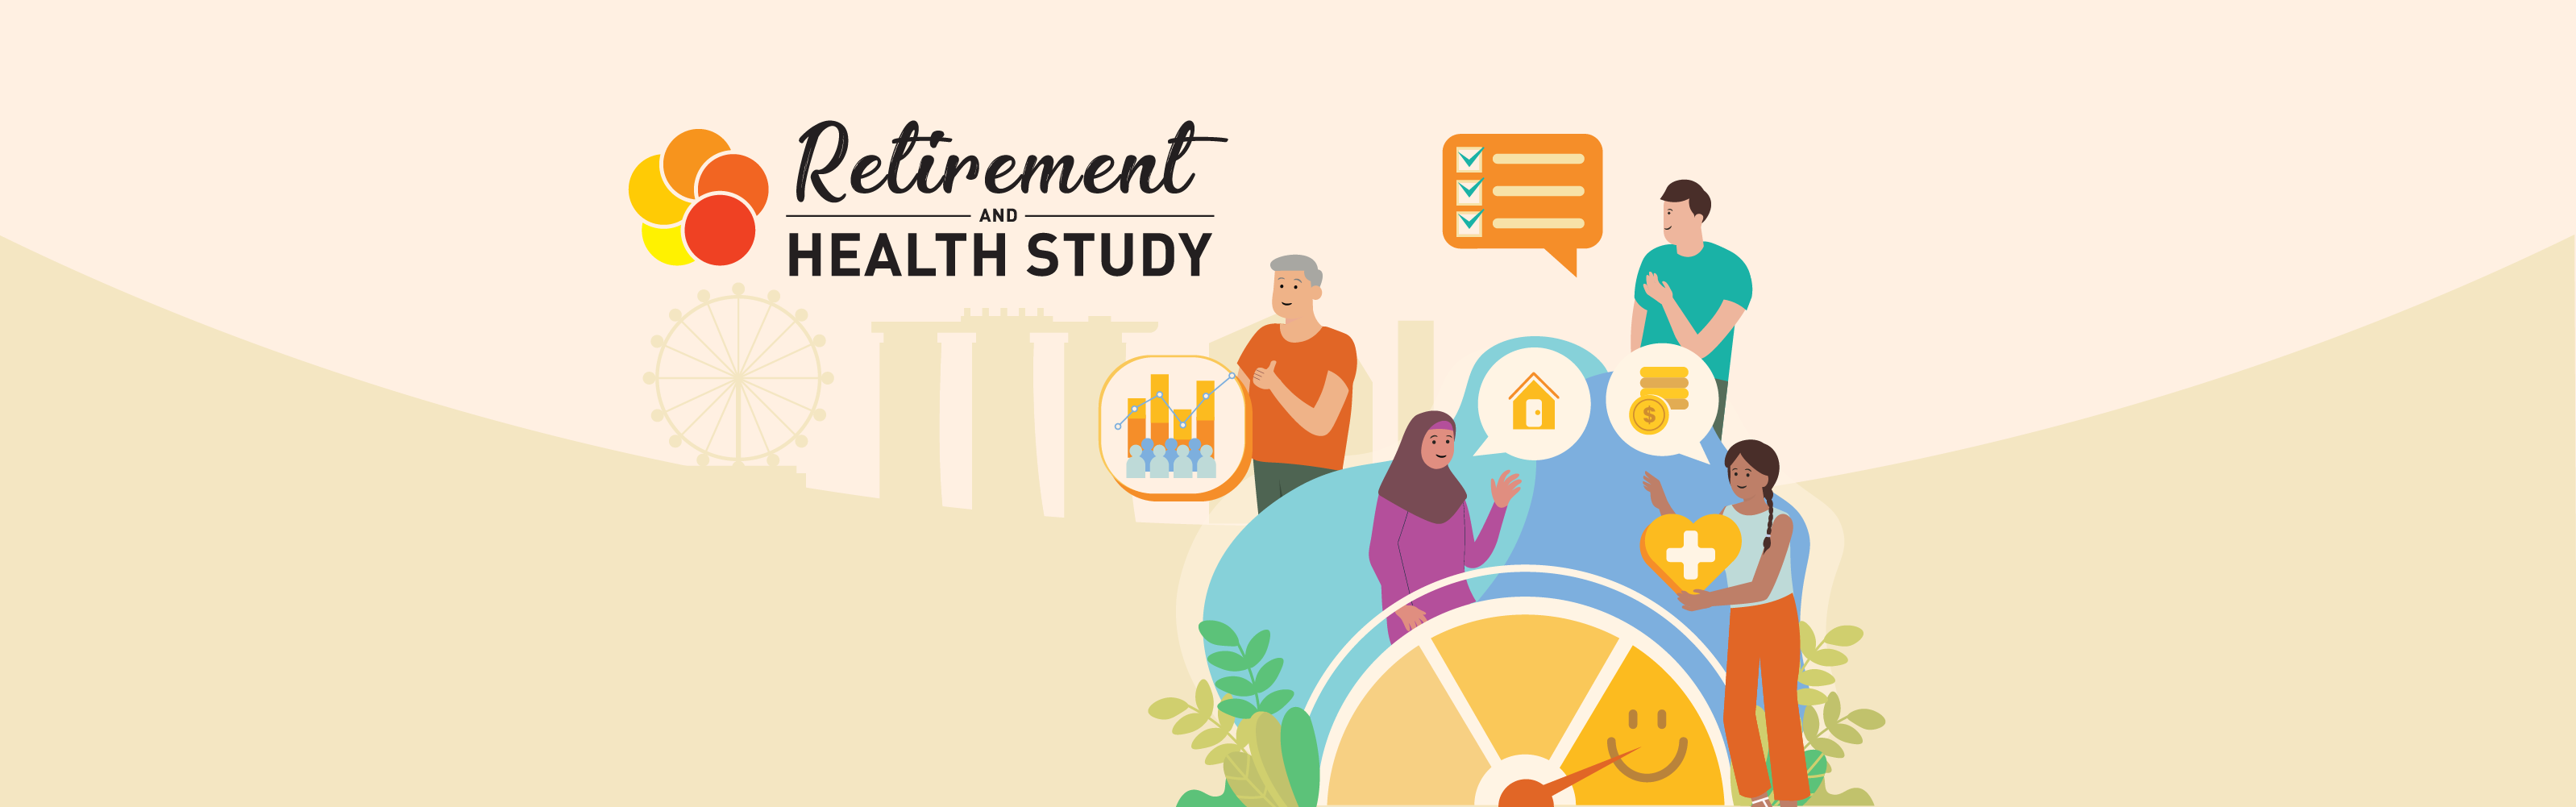 Retirement health study 2022/23 graphic 